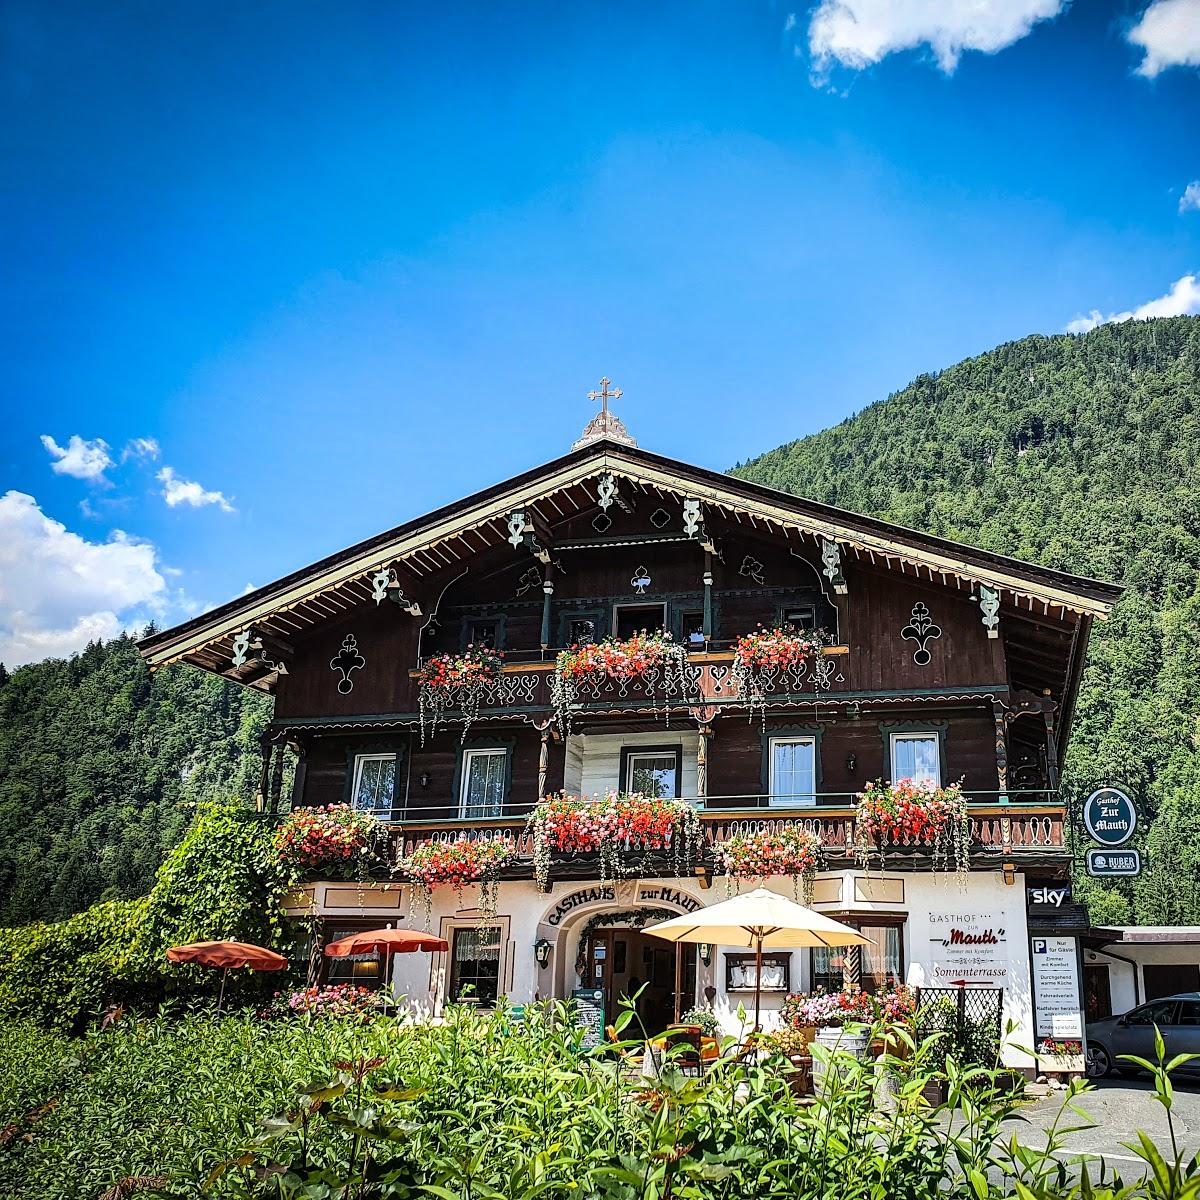 Restaurant "Gasthof Mauth" in Kirchdorf in Tirol